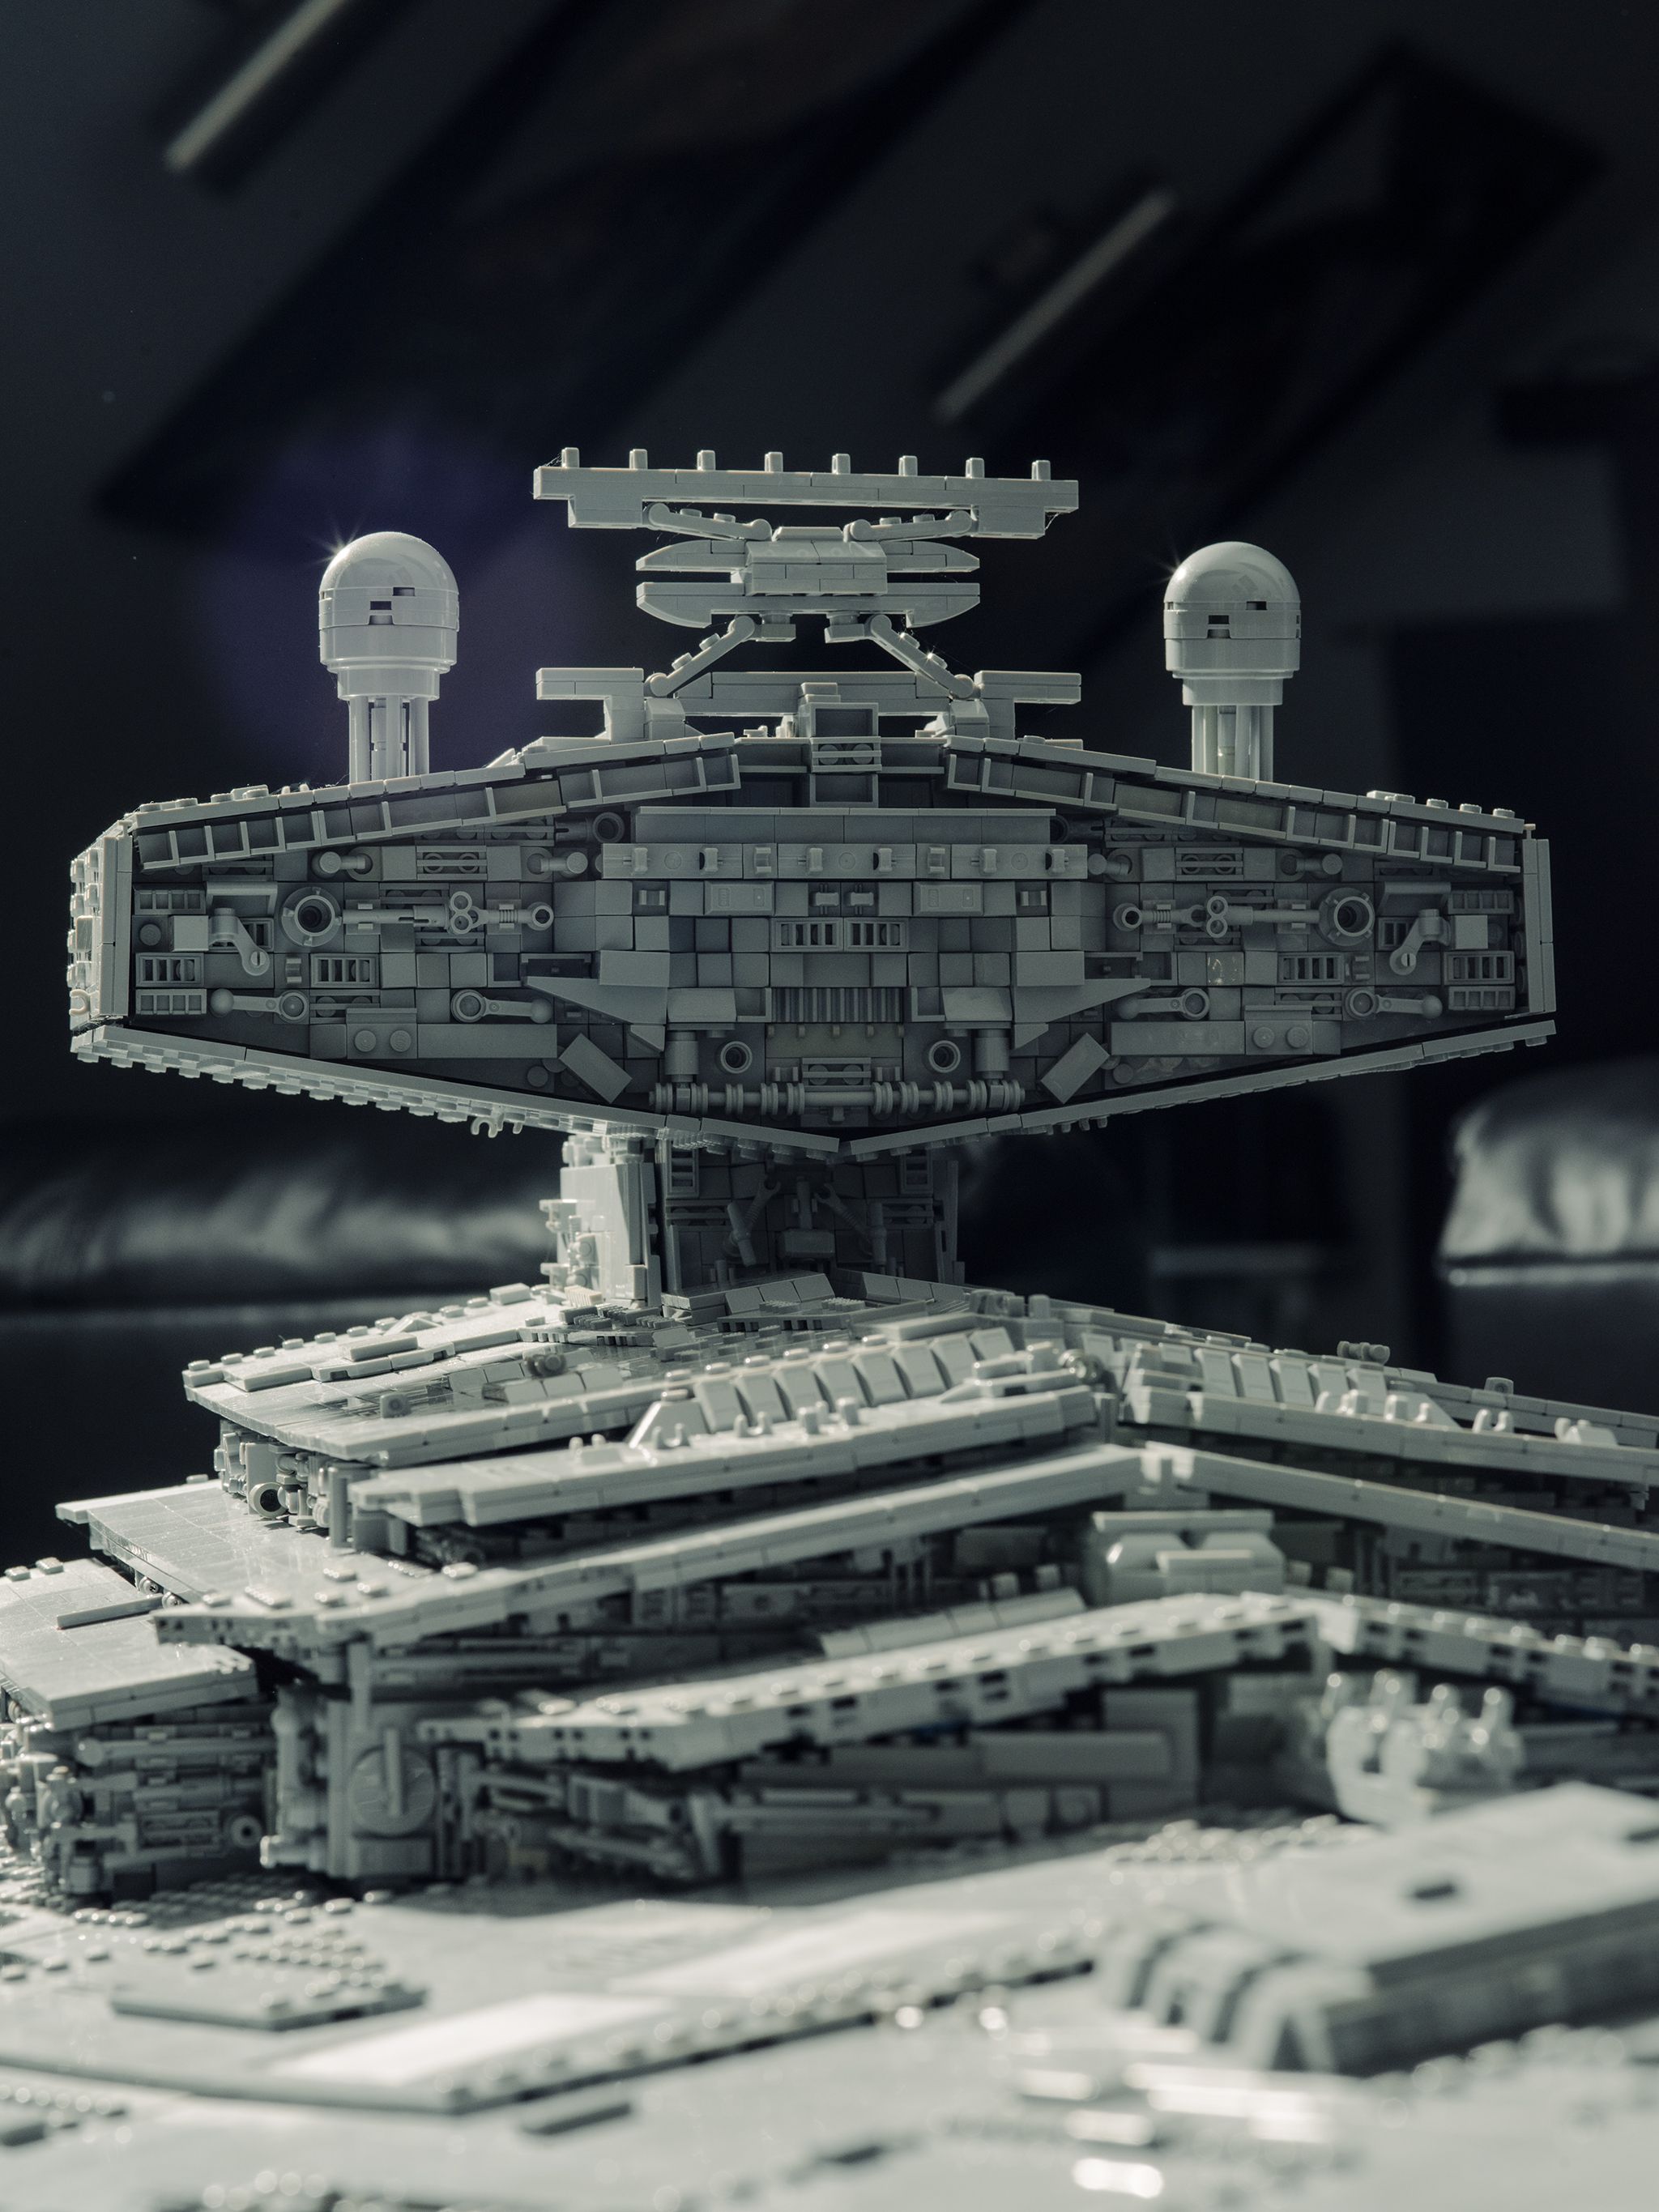 lego custom star wars ships